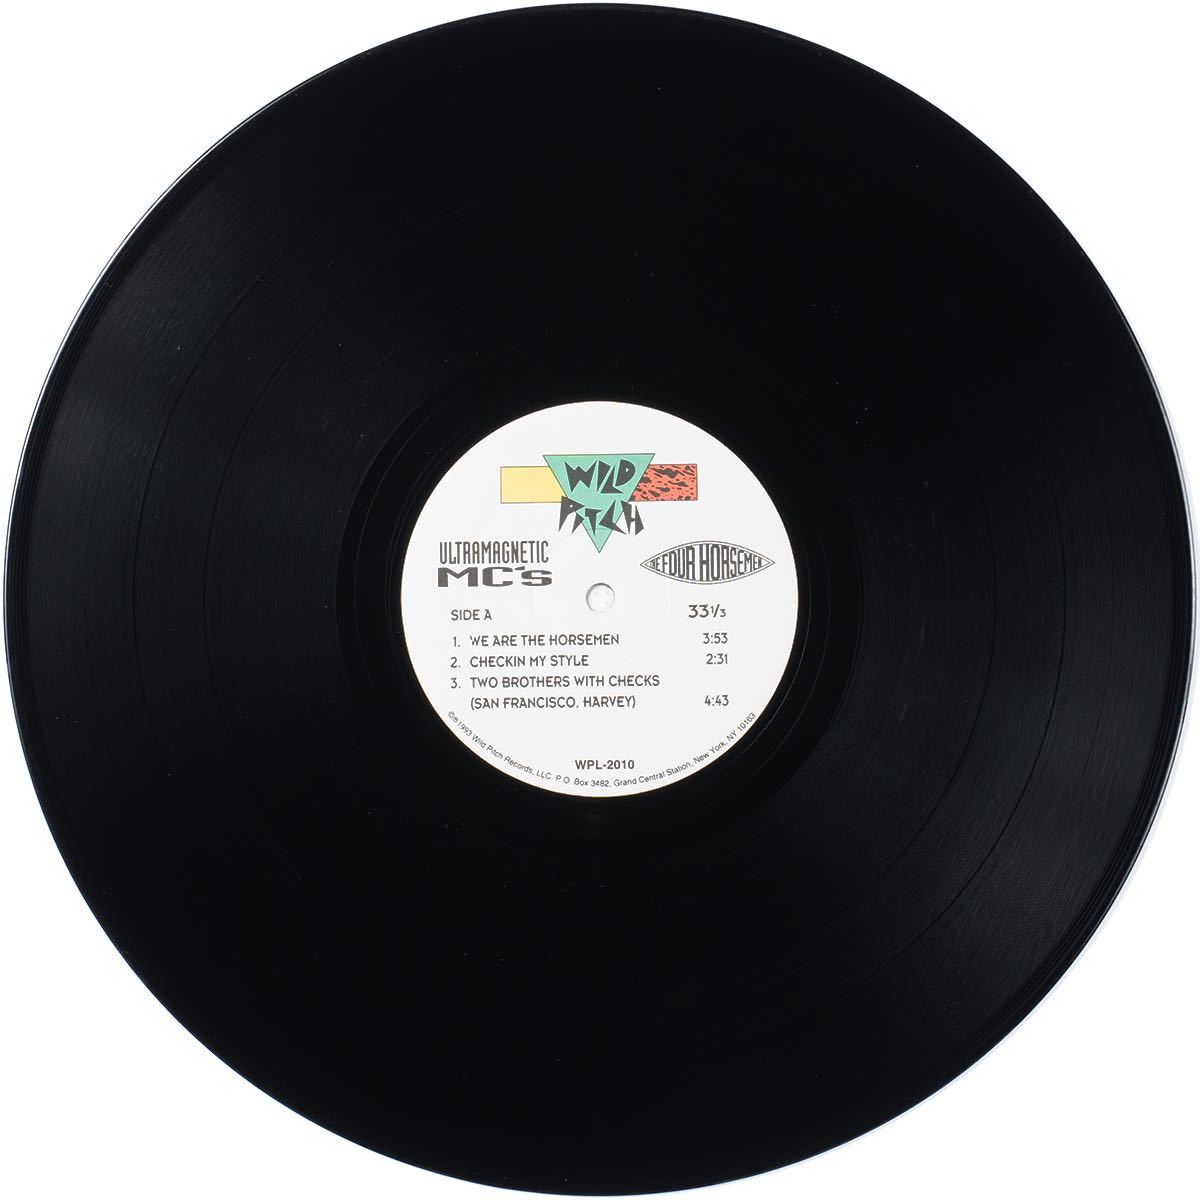 US盤 Ultramagnetic Mc's The Four Horsemen D. J. Special Double Vinyl LPレコード_画像3